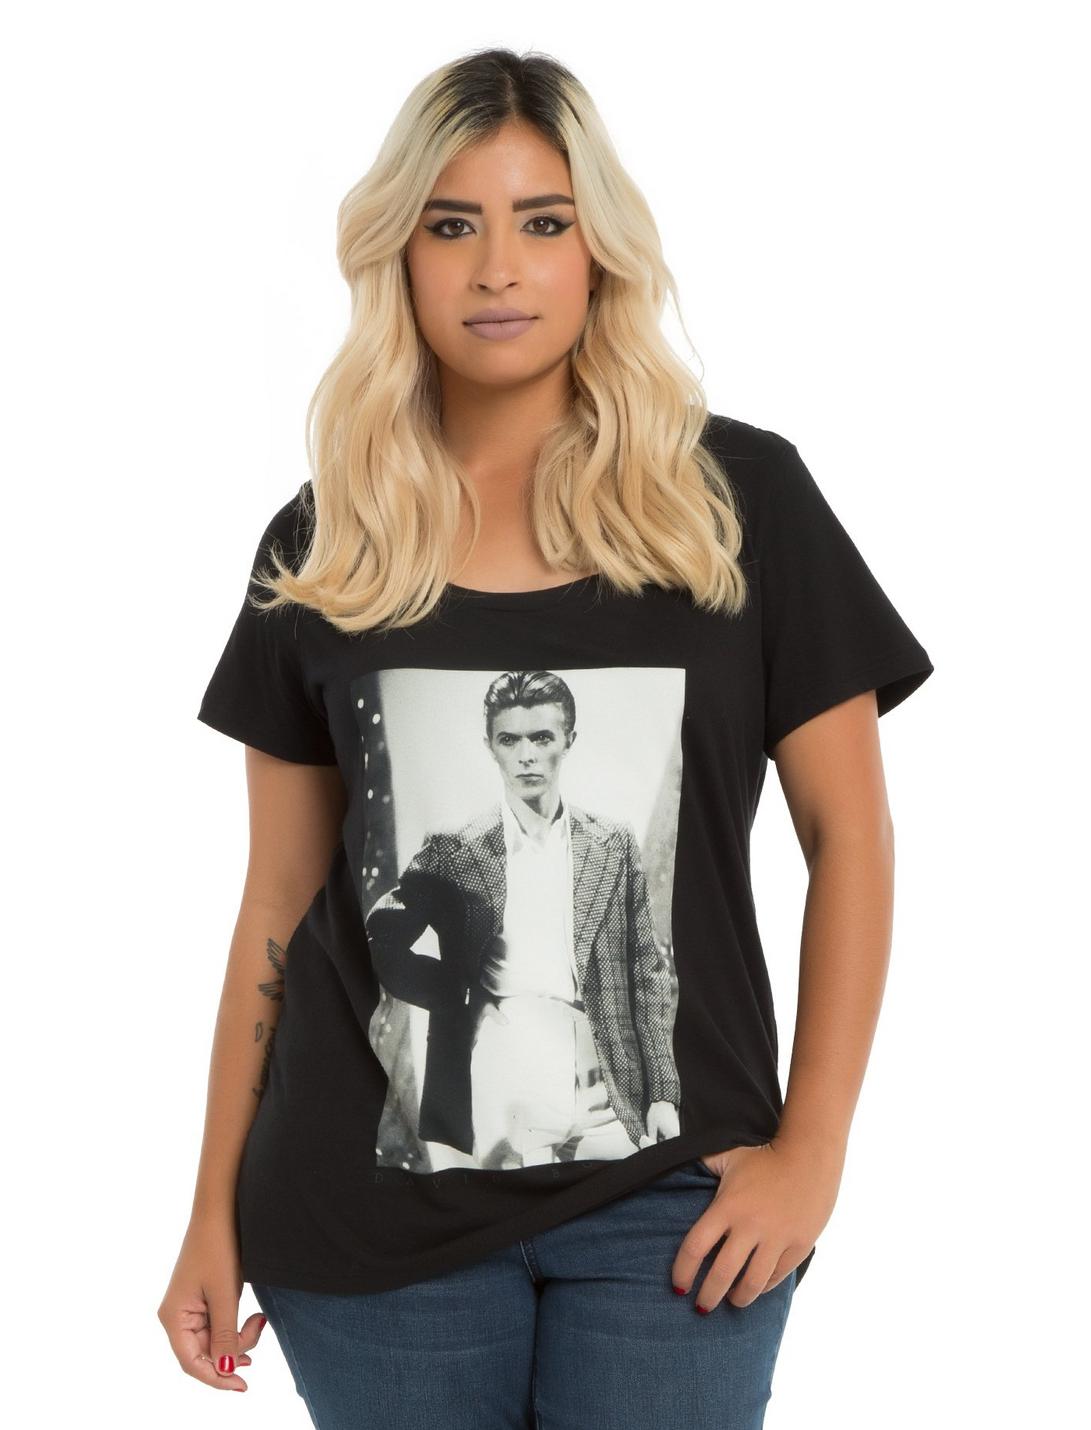 David Bowie Black & White Photo Girls T-Shirt Plus Size, BLACK, hi-res